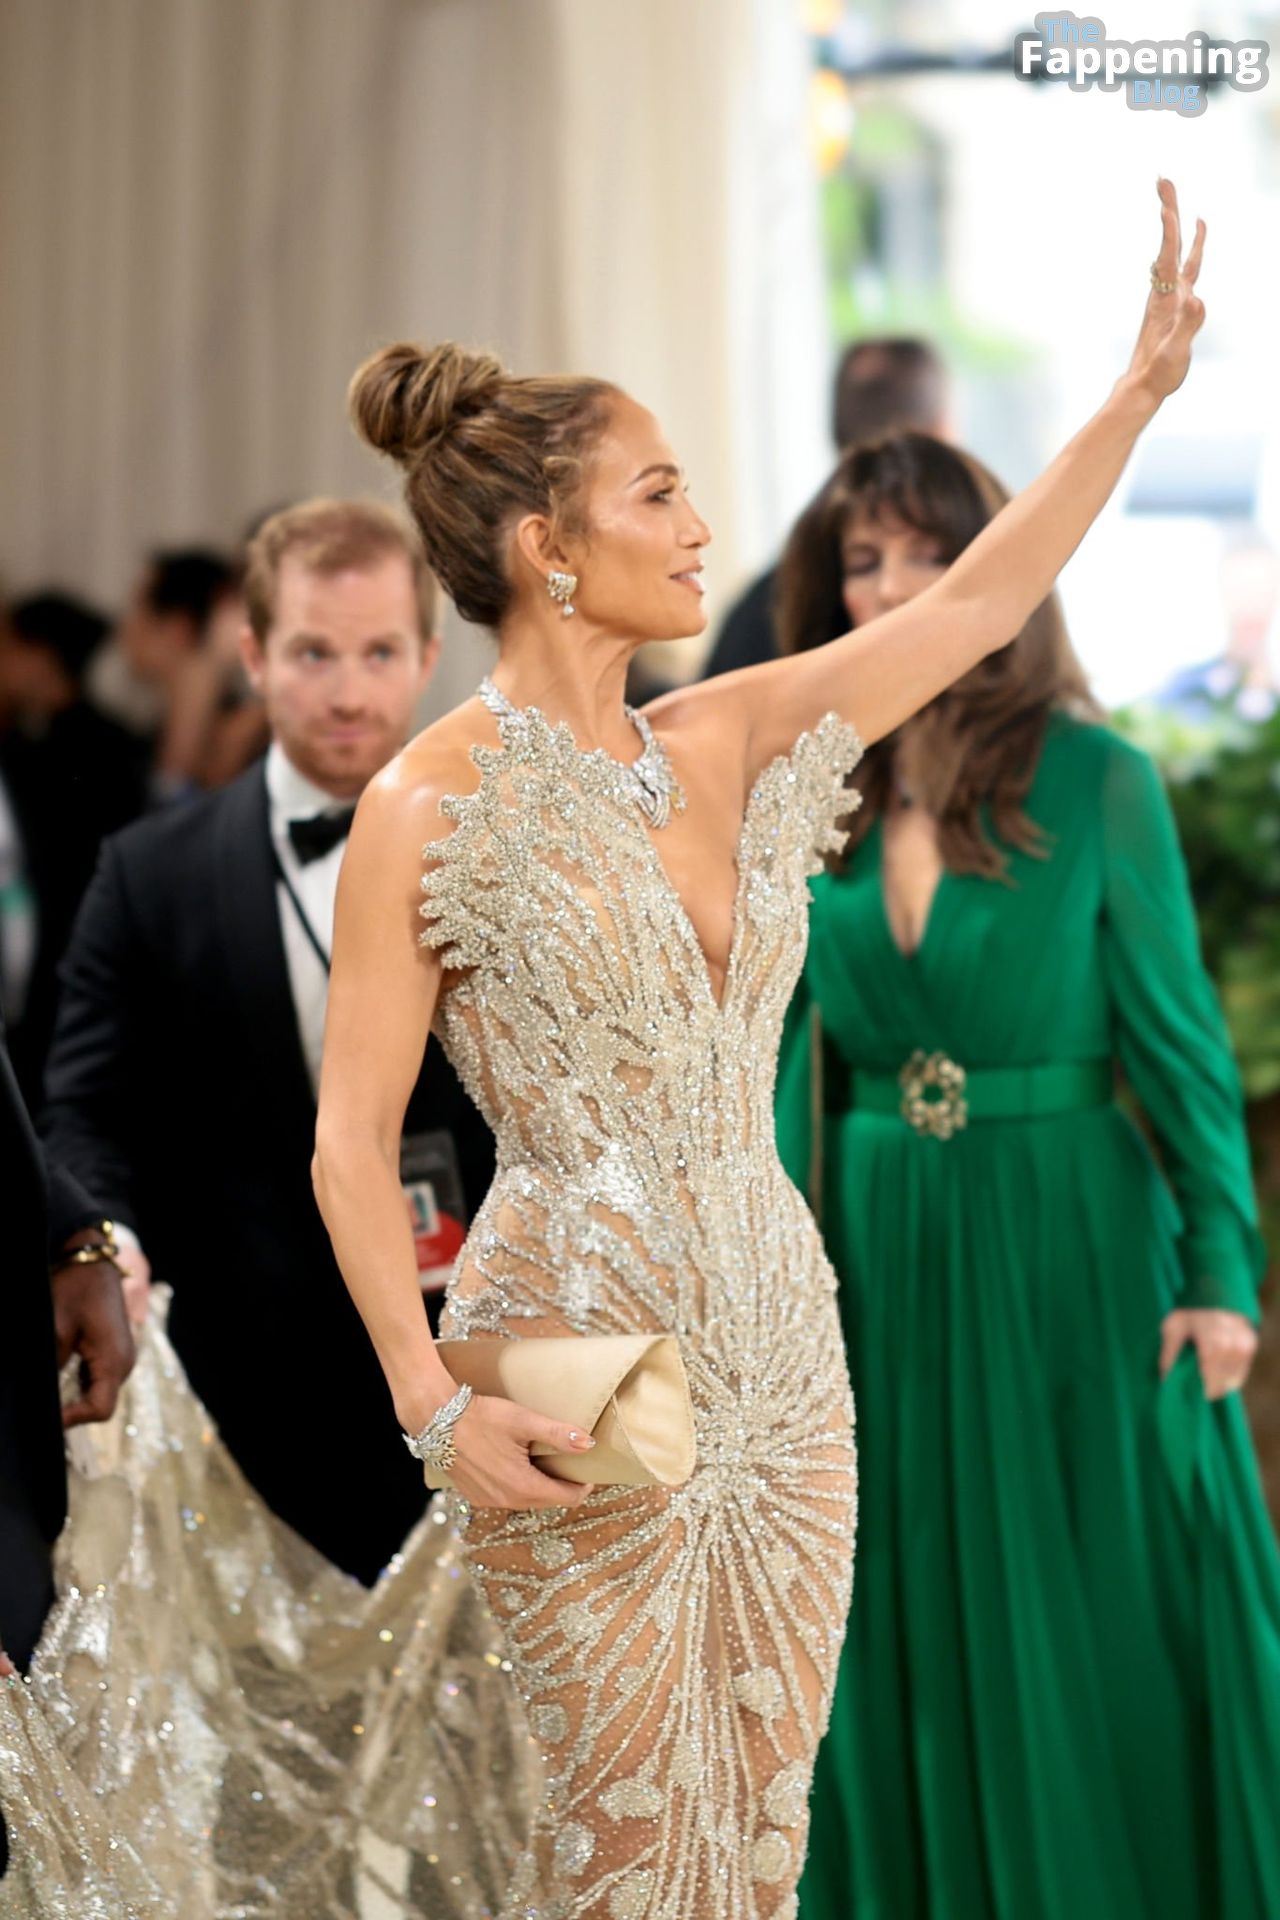 Jennifer-Lopez-Hot-58-The-Fappening-Blog.jpg